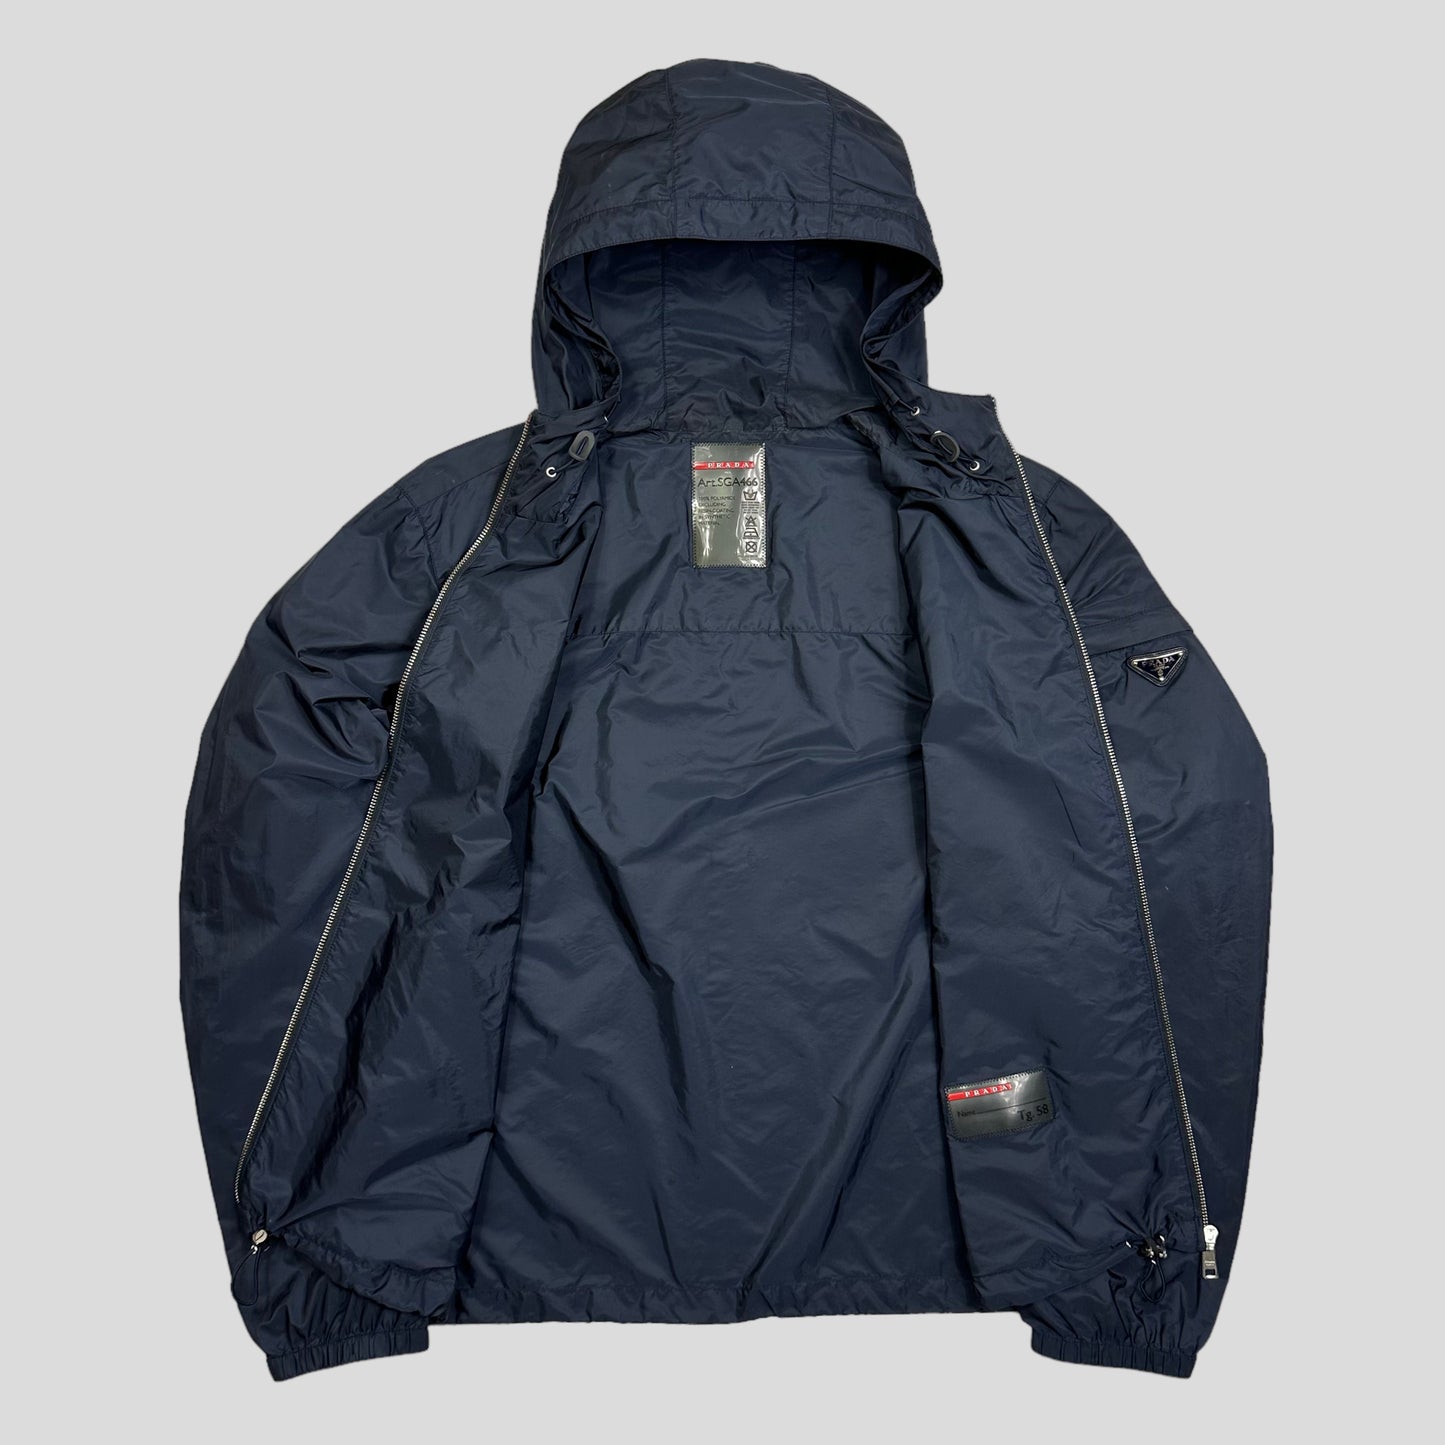 Prada Milano 2016 Nylon K-way Windbreaker Jacket - XL/XXL